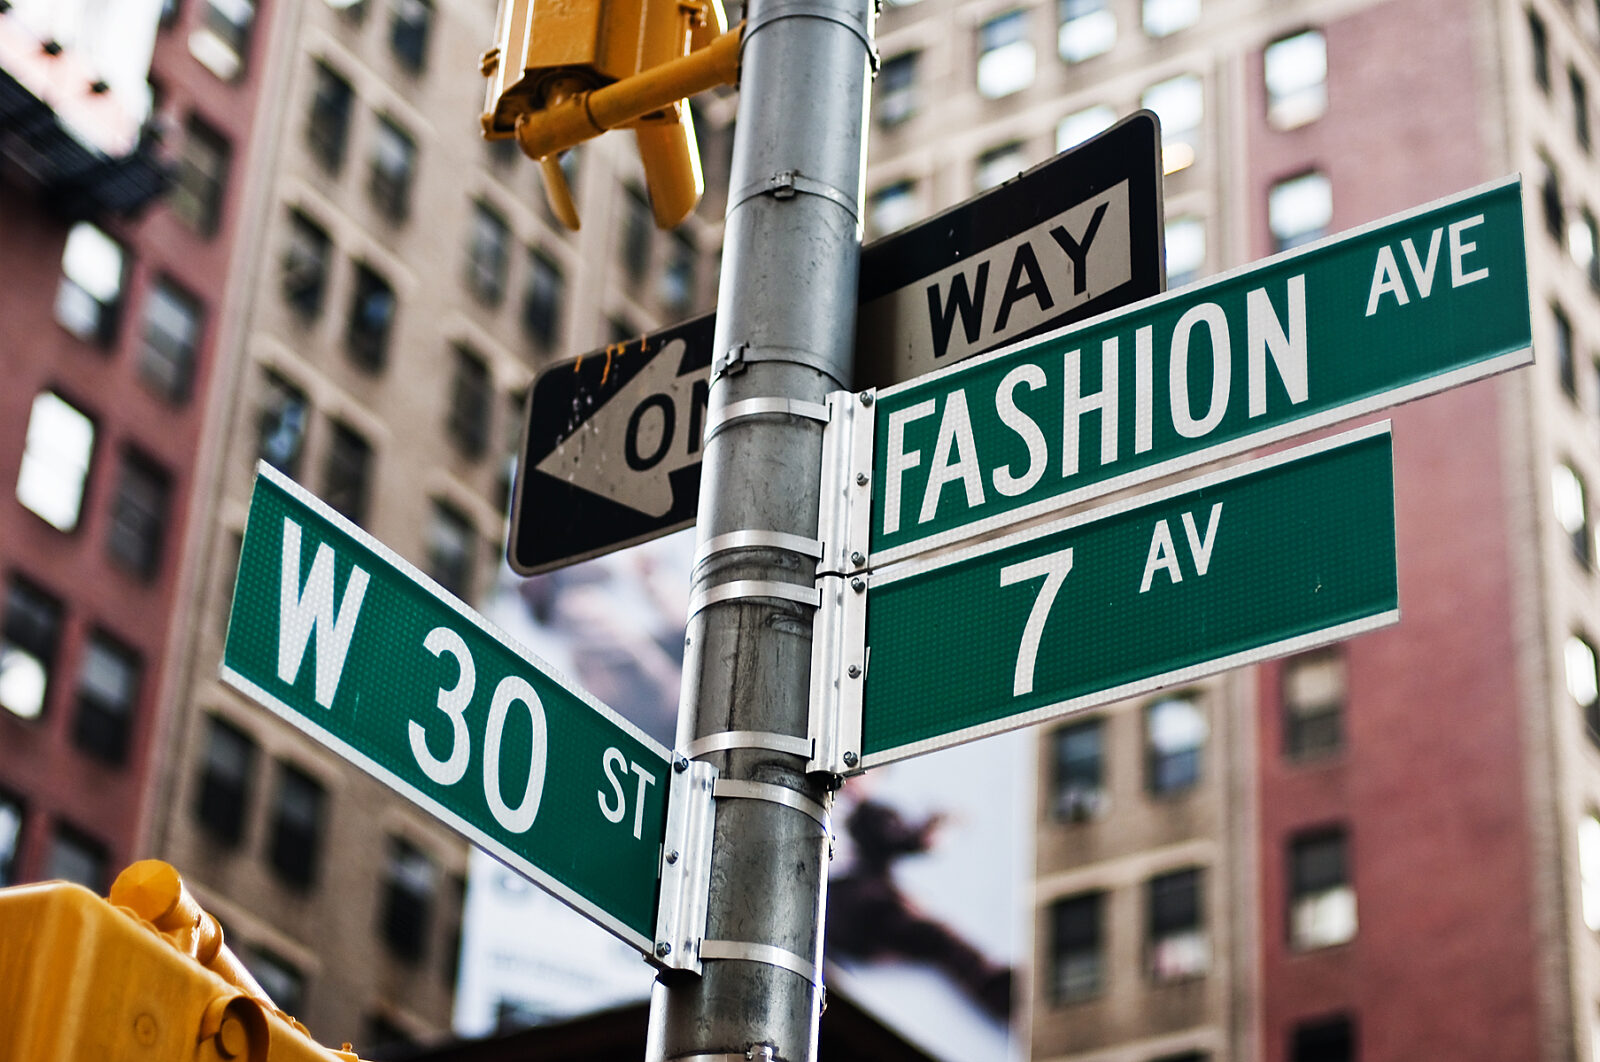 Background image: New York Fashion Act Banner